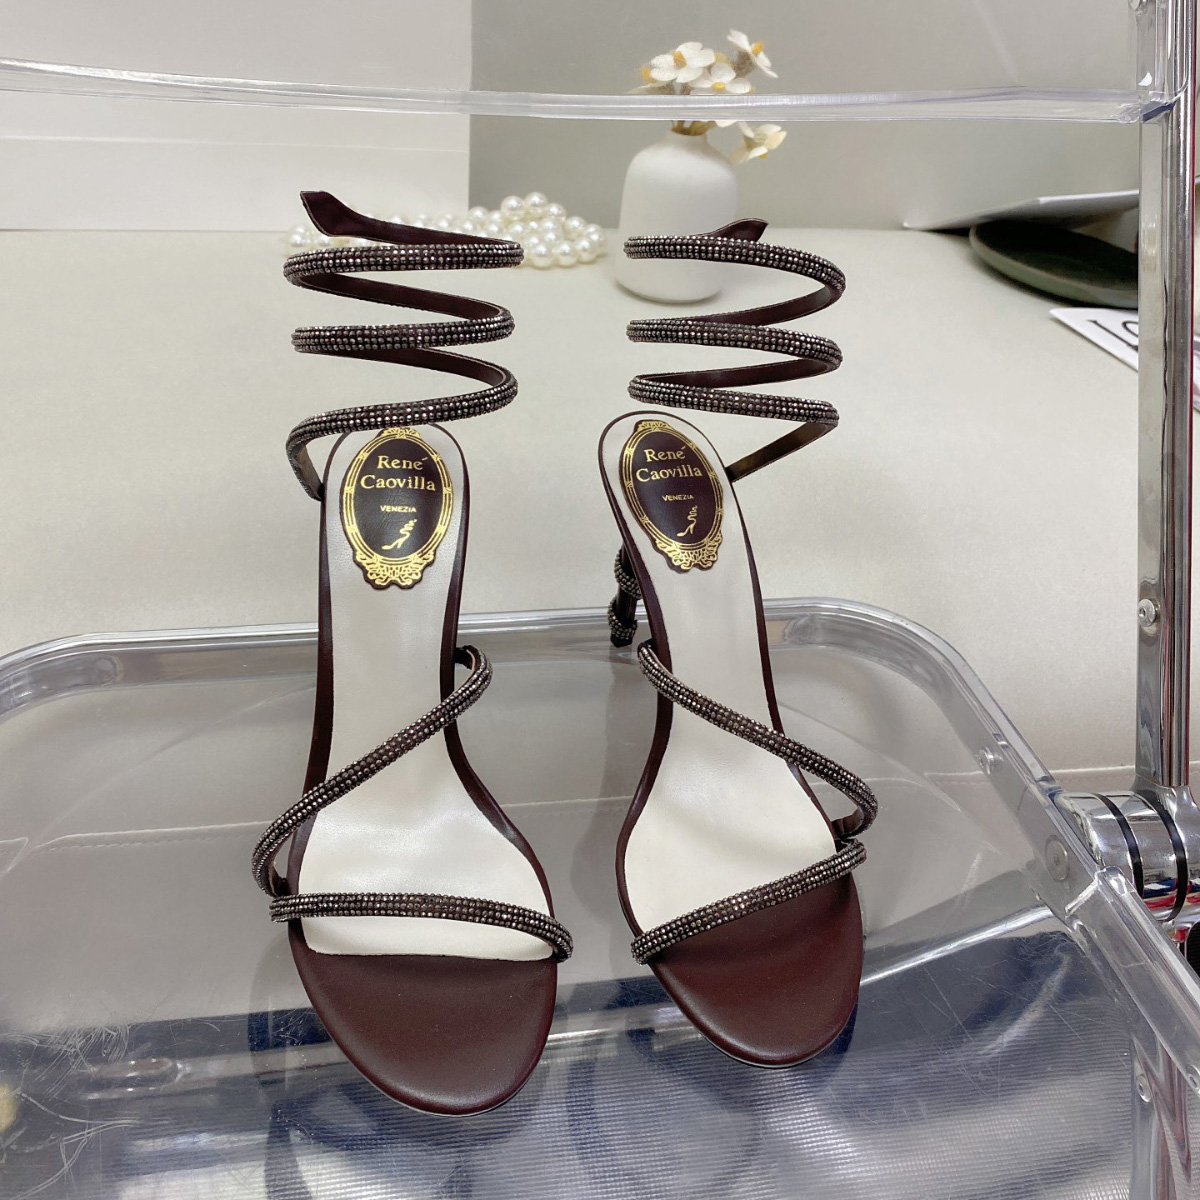 

embellished Margot Rene caovilla leather sandals Snake Strass stiletto Heel Evening shoes for women heeled Luxury Designer Ankle Wraparound 2H37, Red/gold